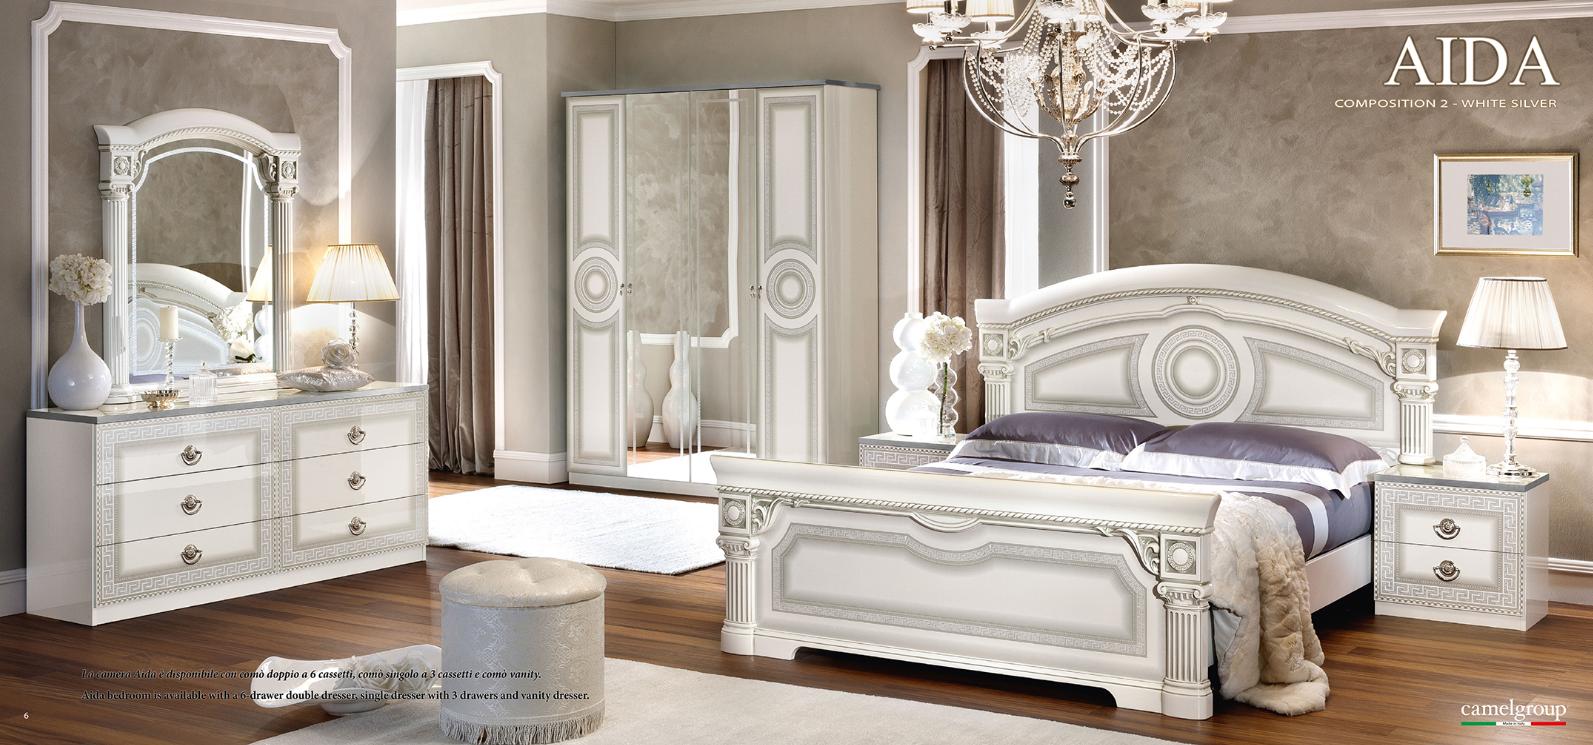 Traditional Platform Bedroom Set Aida ESF-Aida White-Silver-Q-2NDM-5Pc in White, Silver 